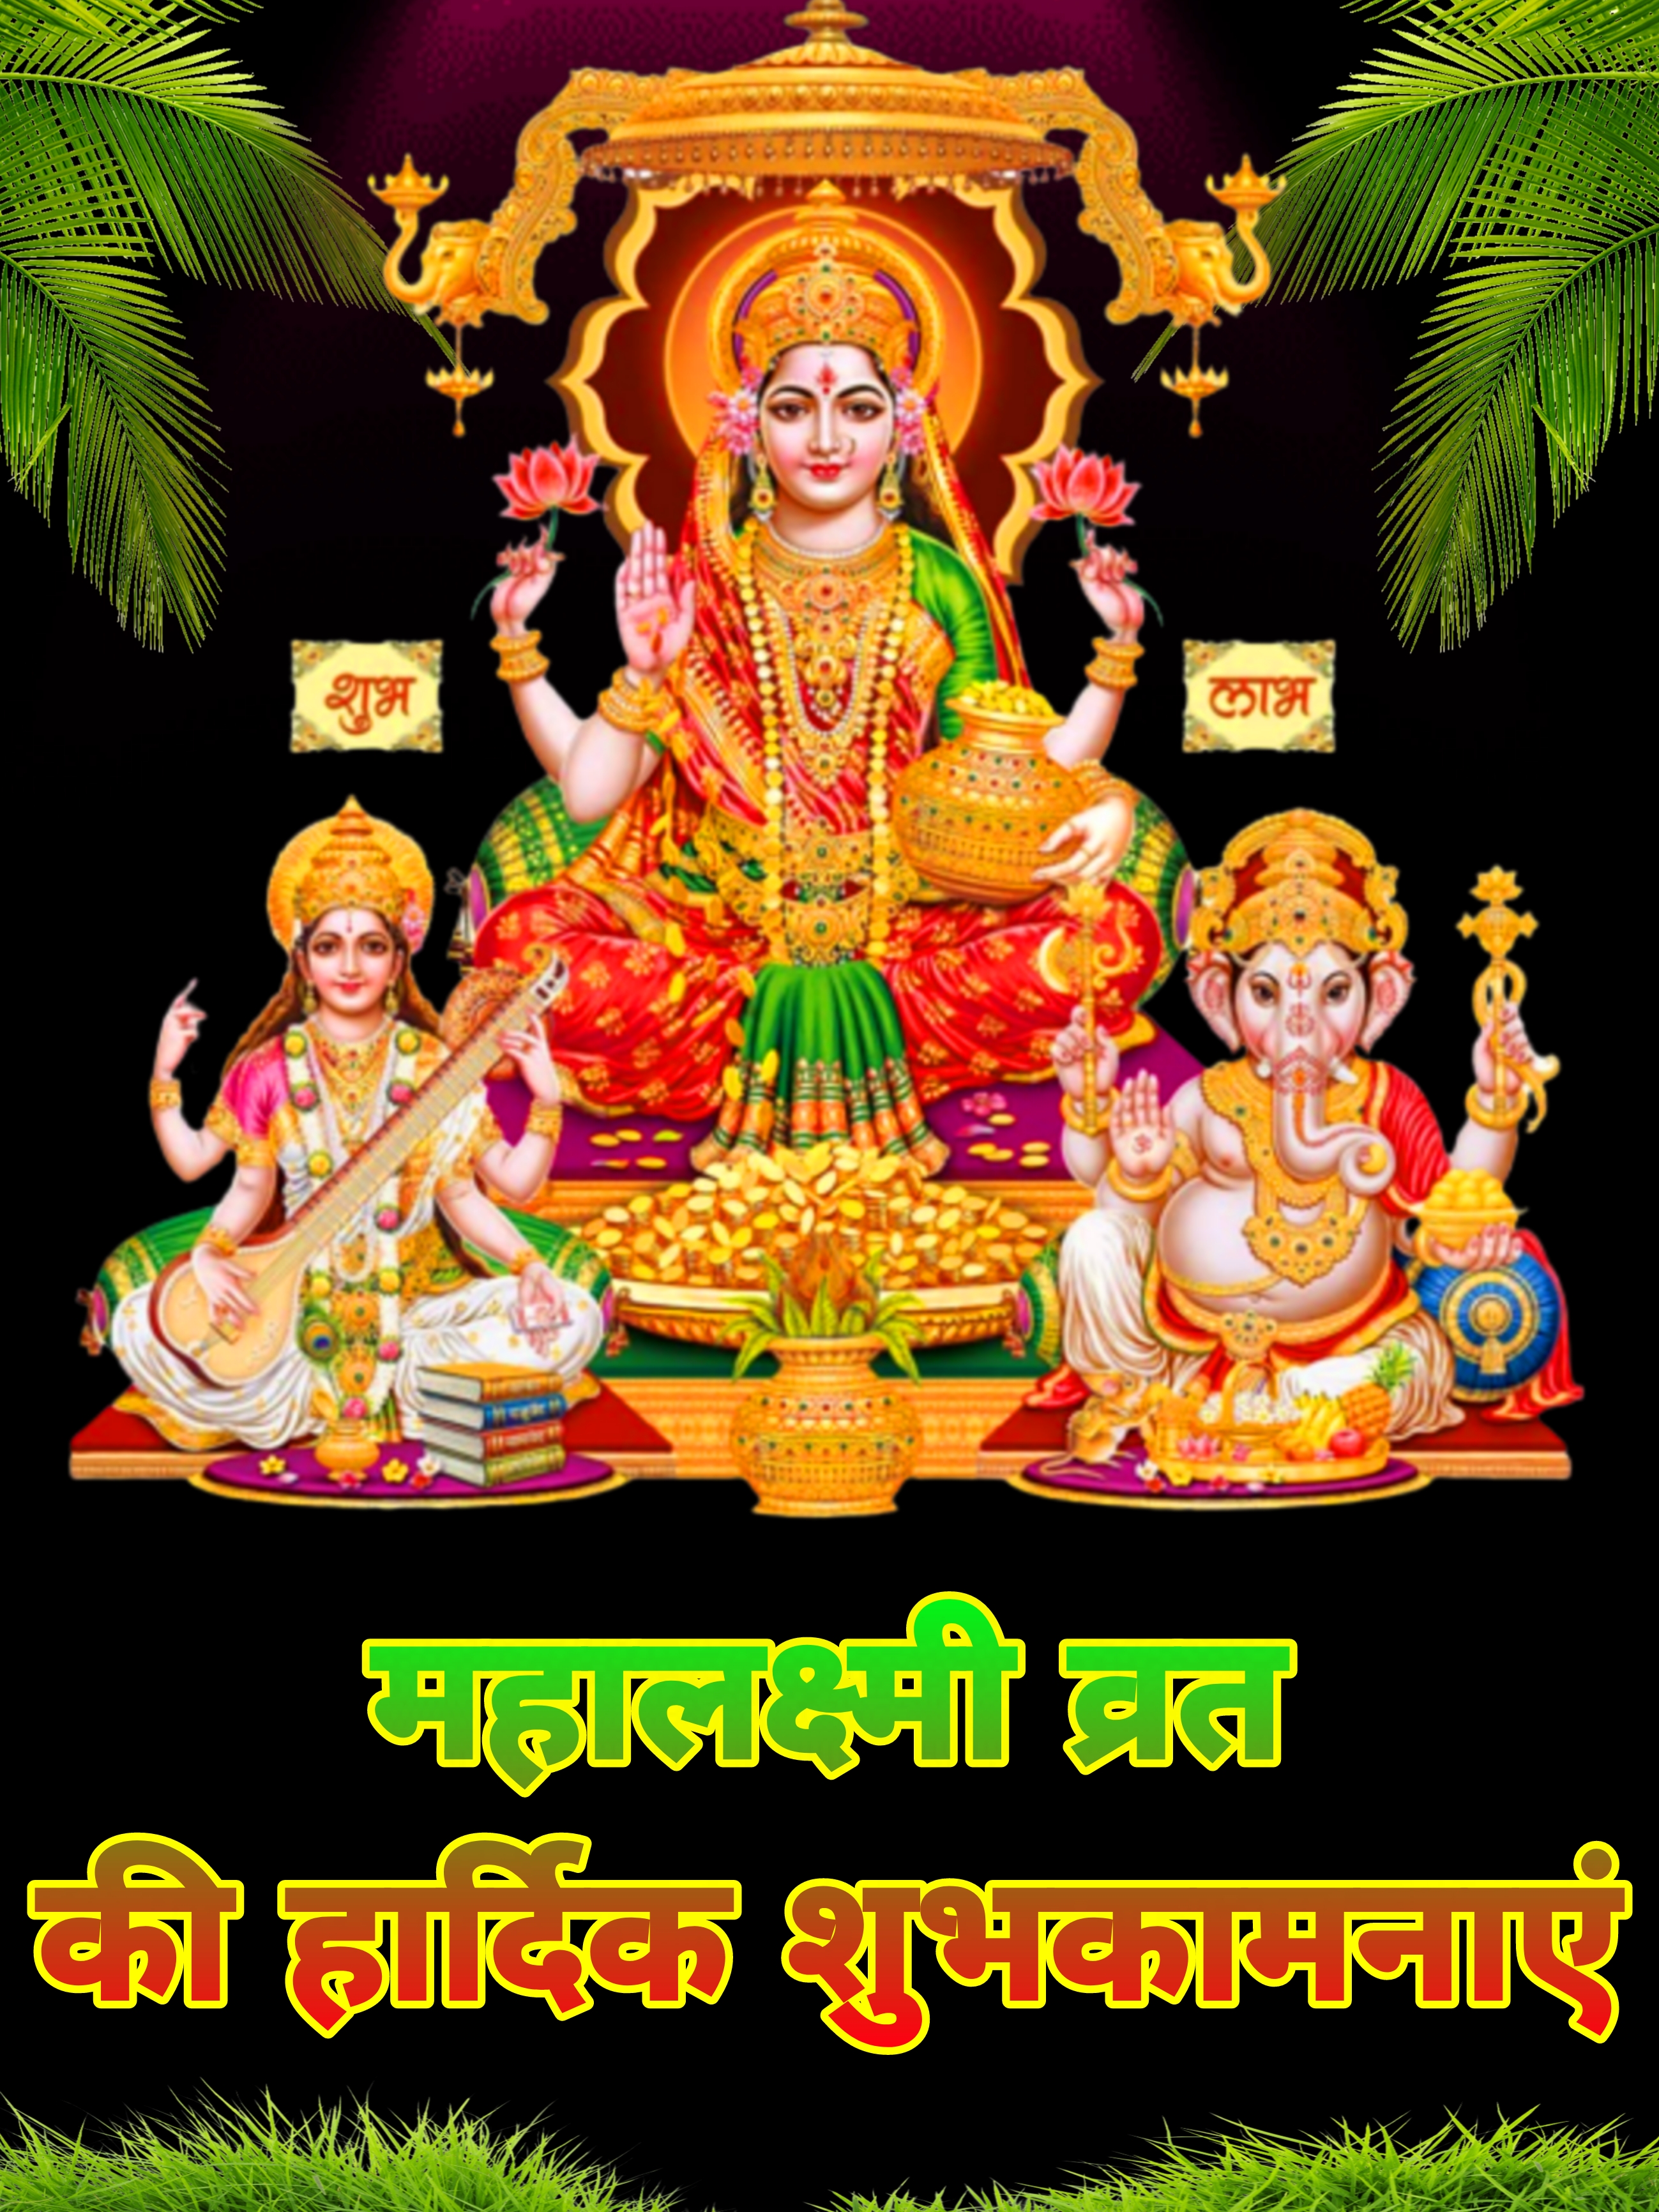 महालक्ष्मी व्रत की हार्दिक शुभकामनाएं | Mahalaxmi Vrat ki Shubhkamnaye image